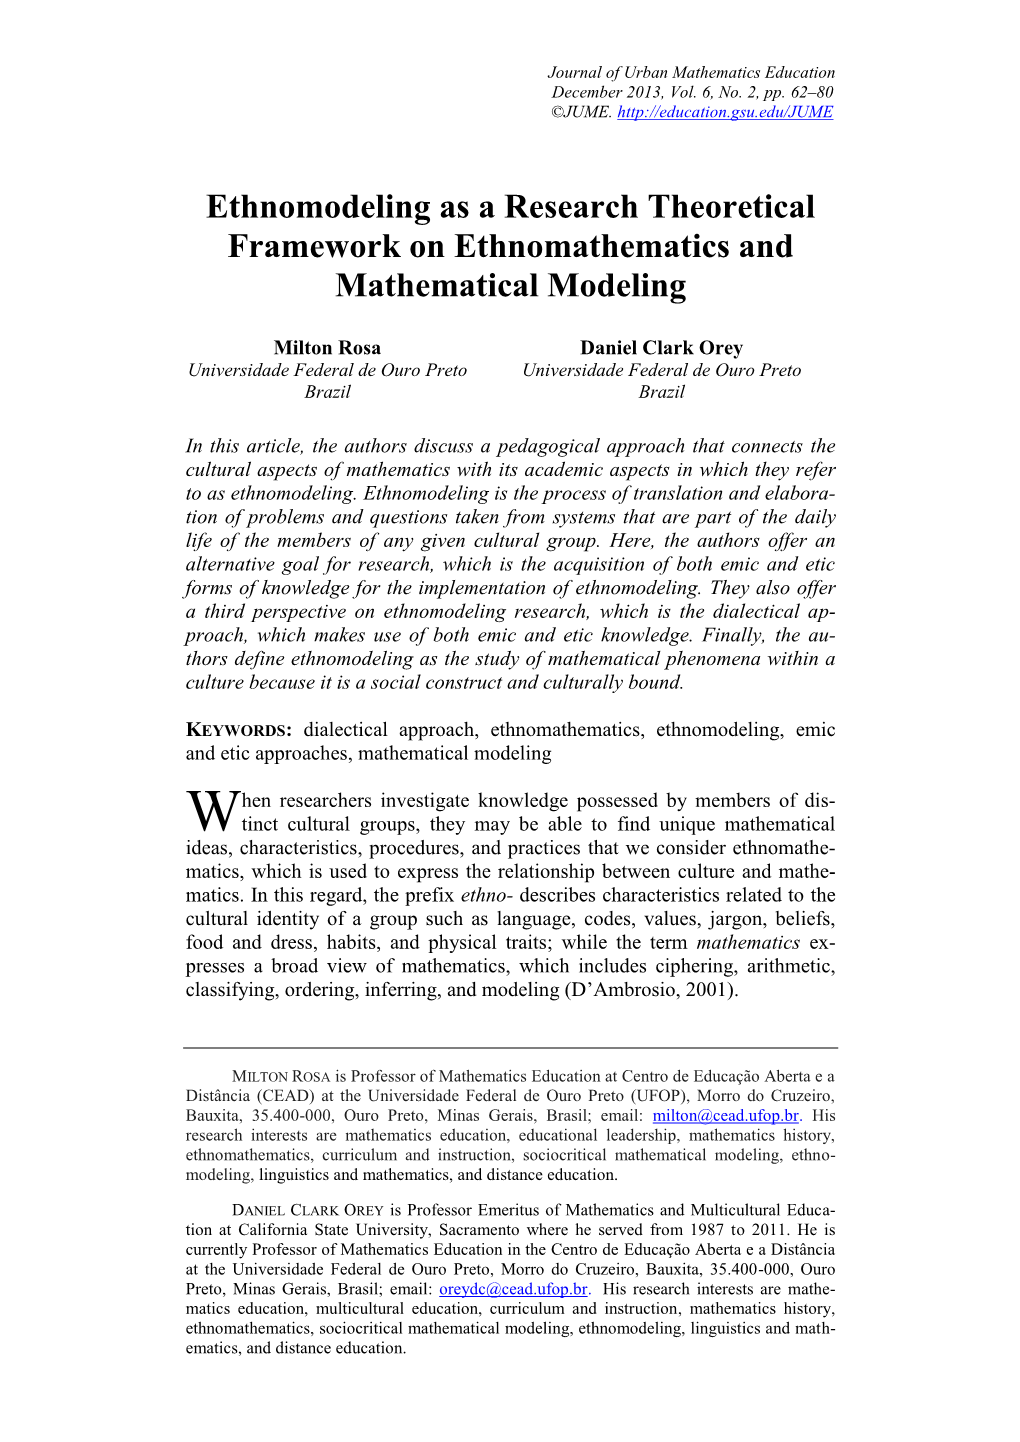 Ethnomodeling As a Research Theoretical Framework on Ethnomathematics and Mathematical Modeling